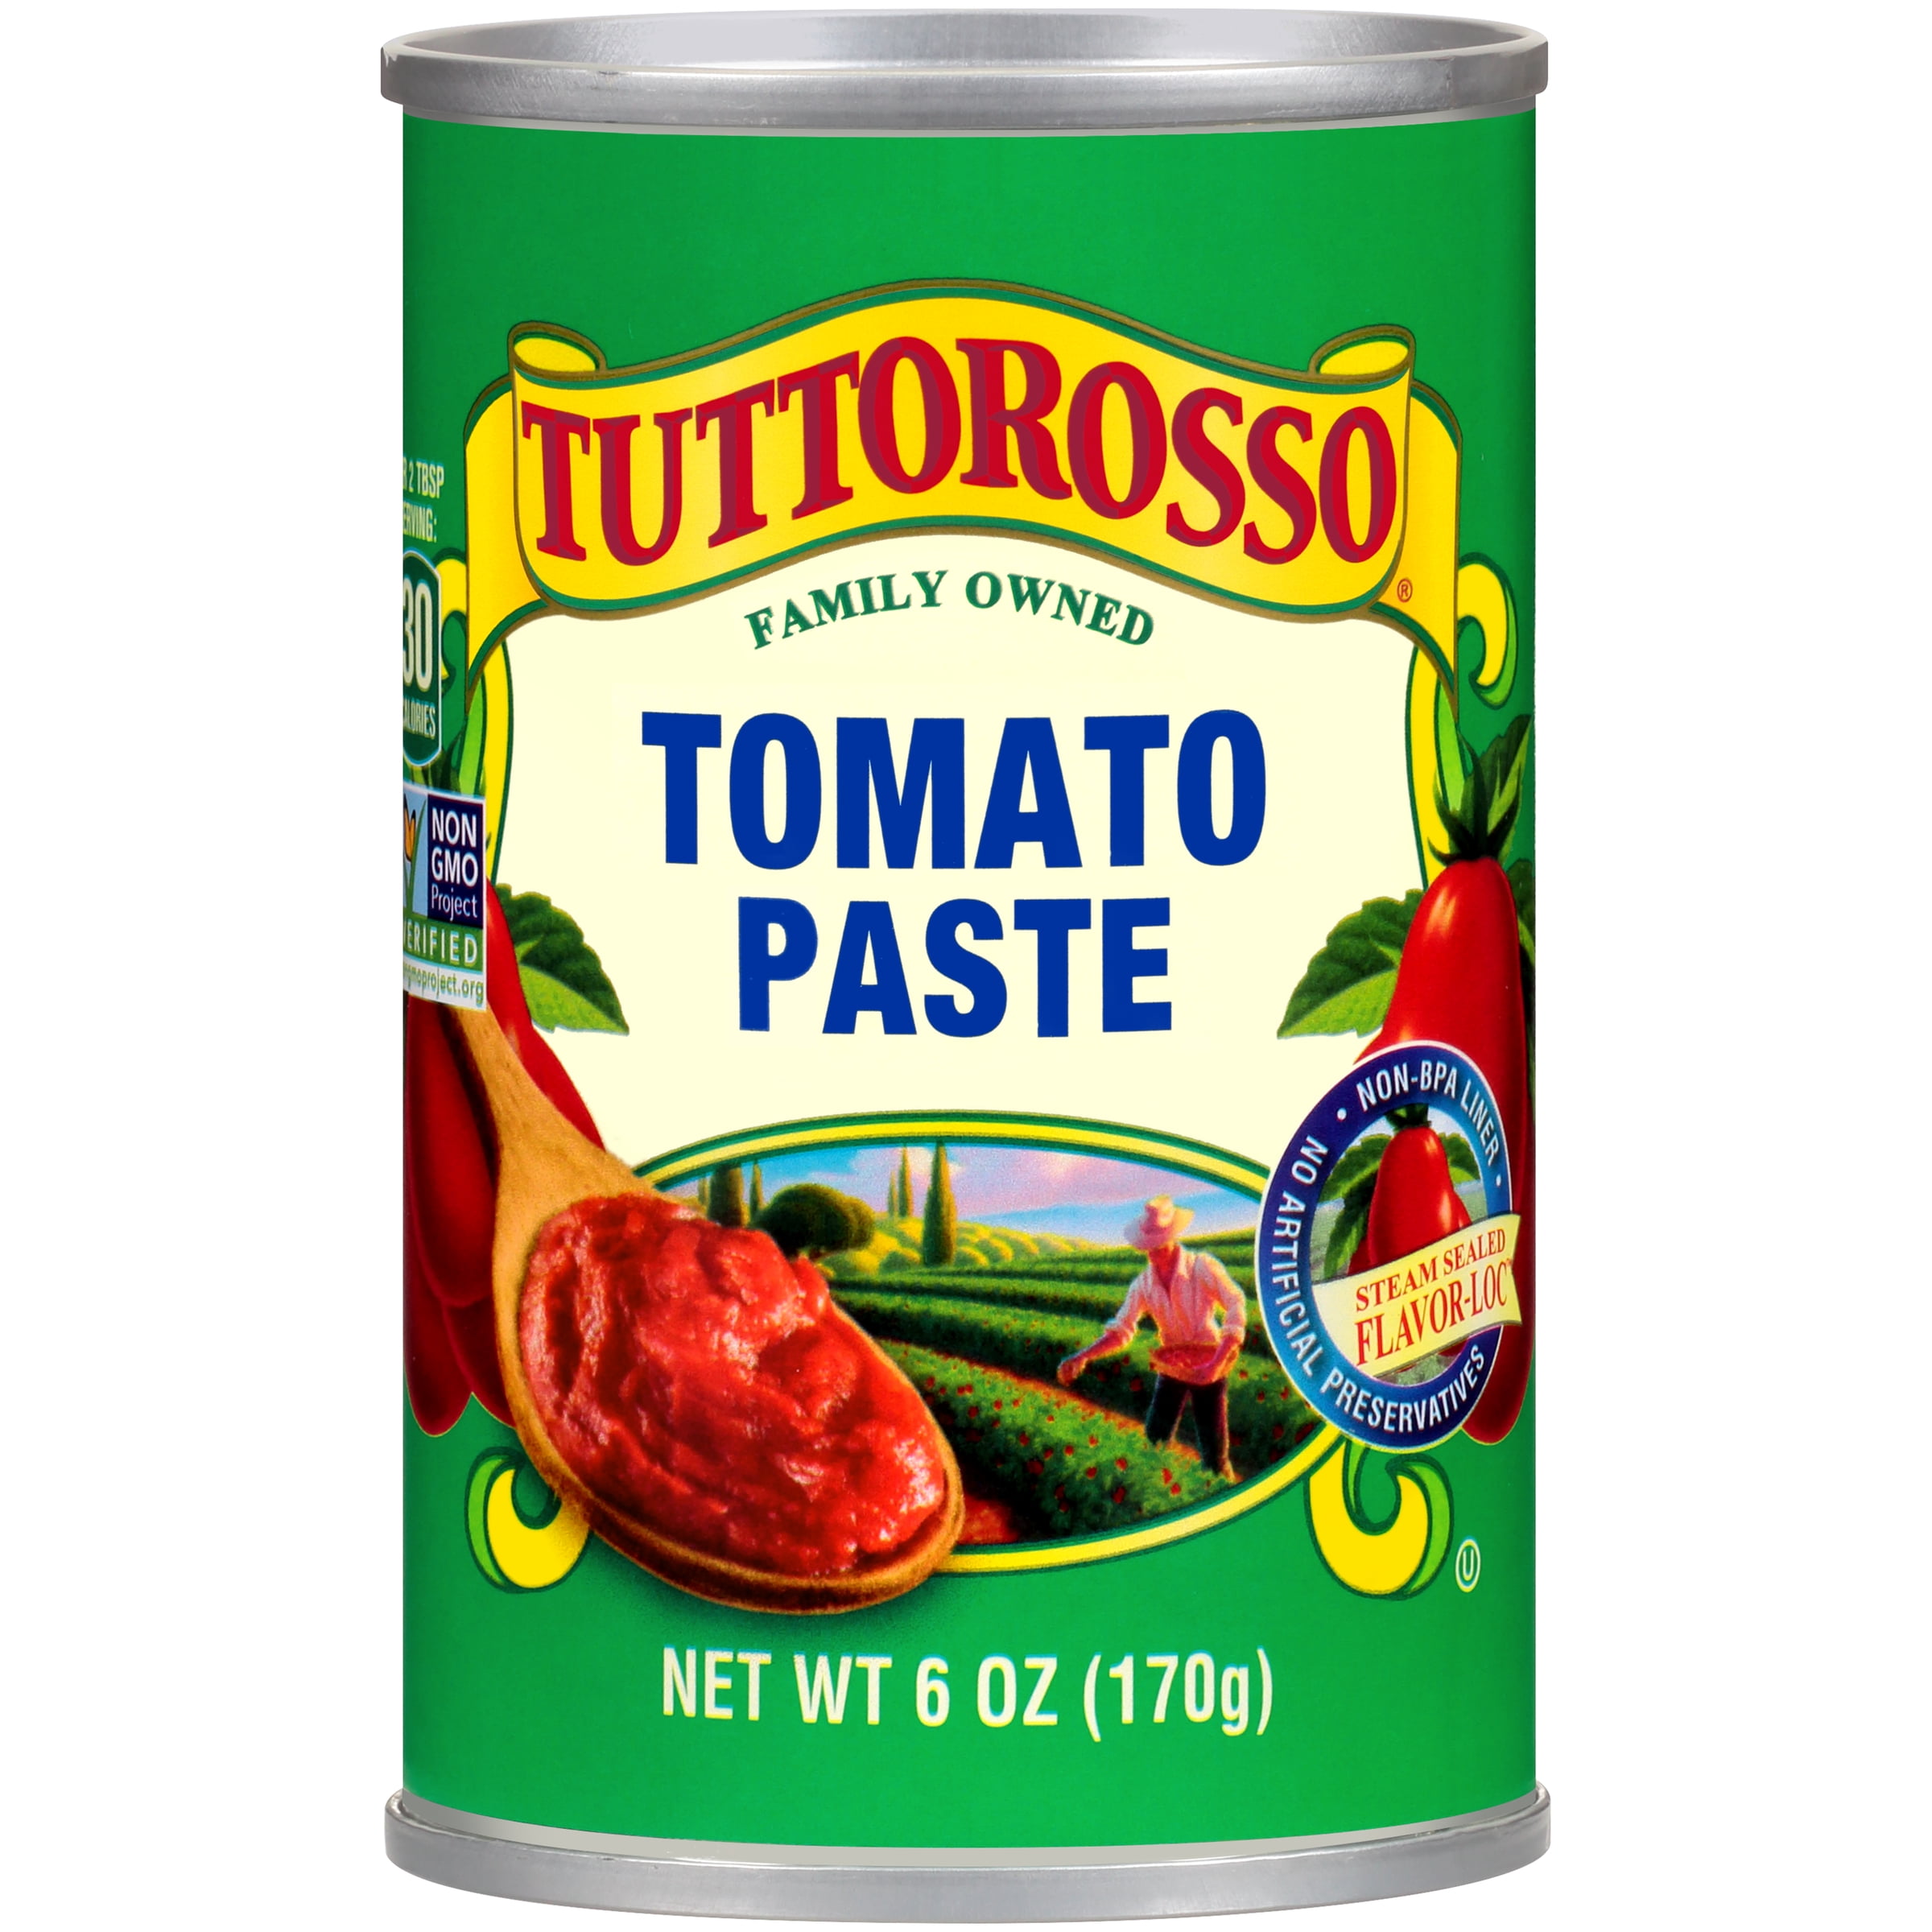 Tuttorosso Green Tomato Paste 6oz - Walmart.com